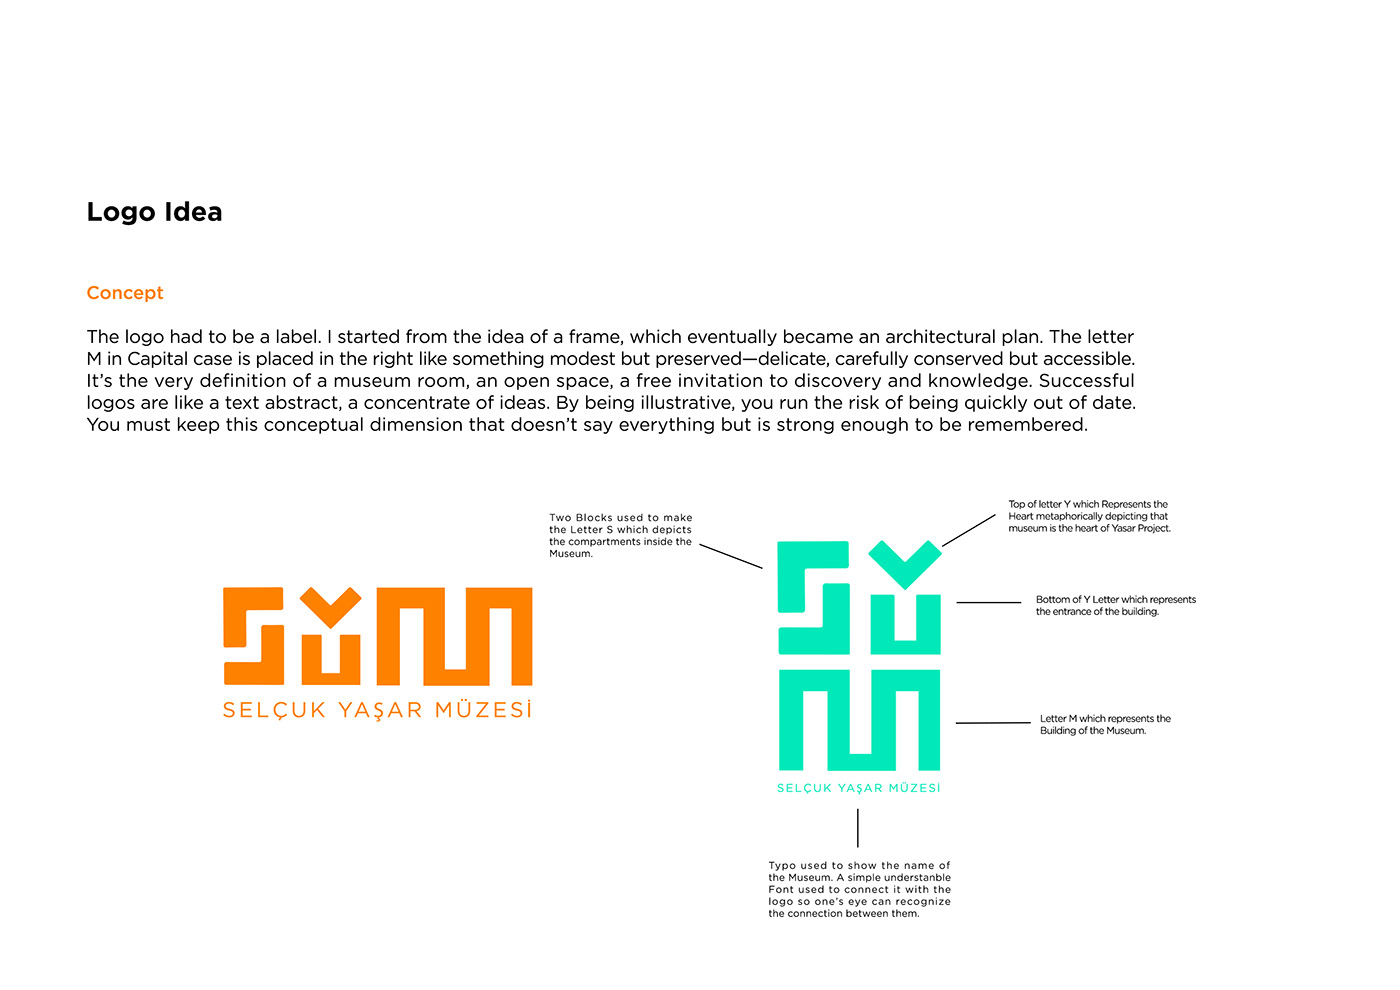 adverstiment adverstising Brand Design branding  Branding design identitydesign logo Poster Design typography   visual identity